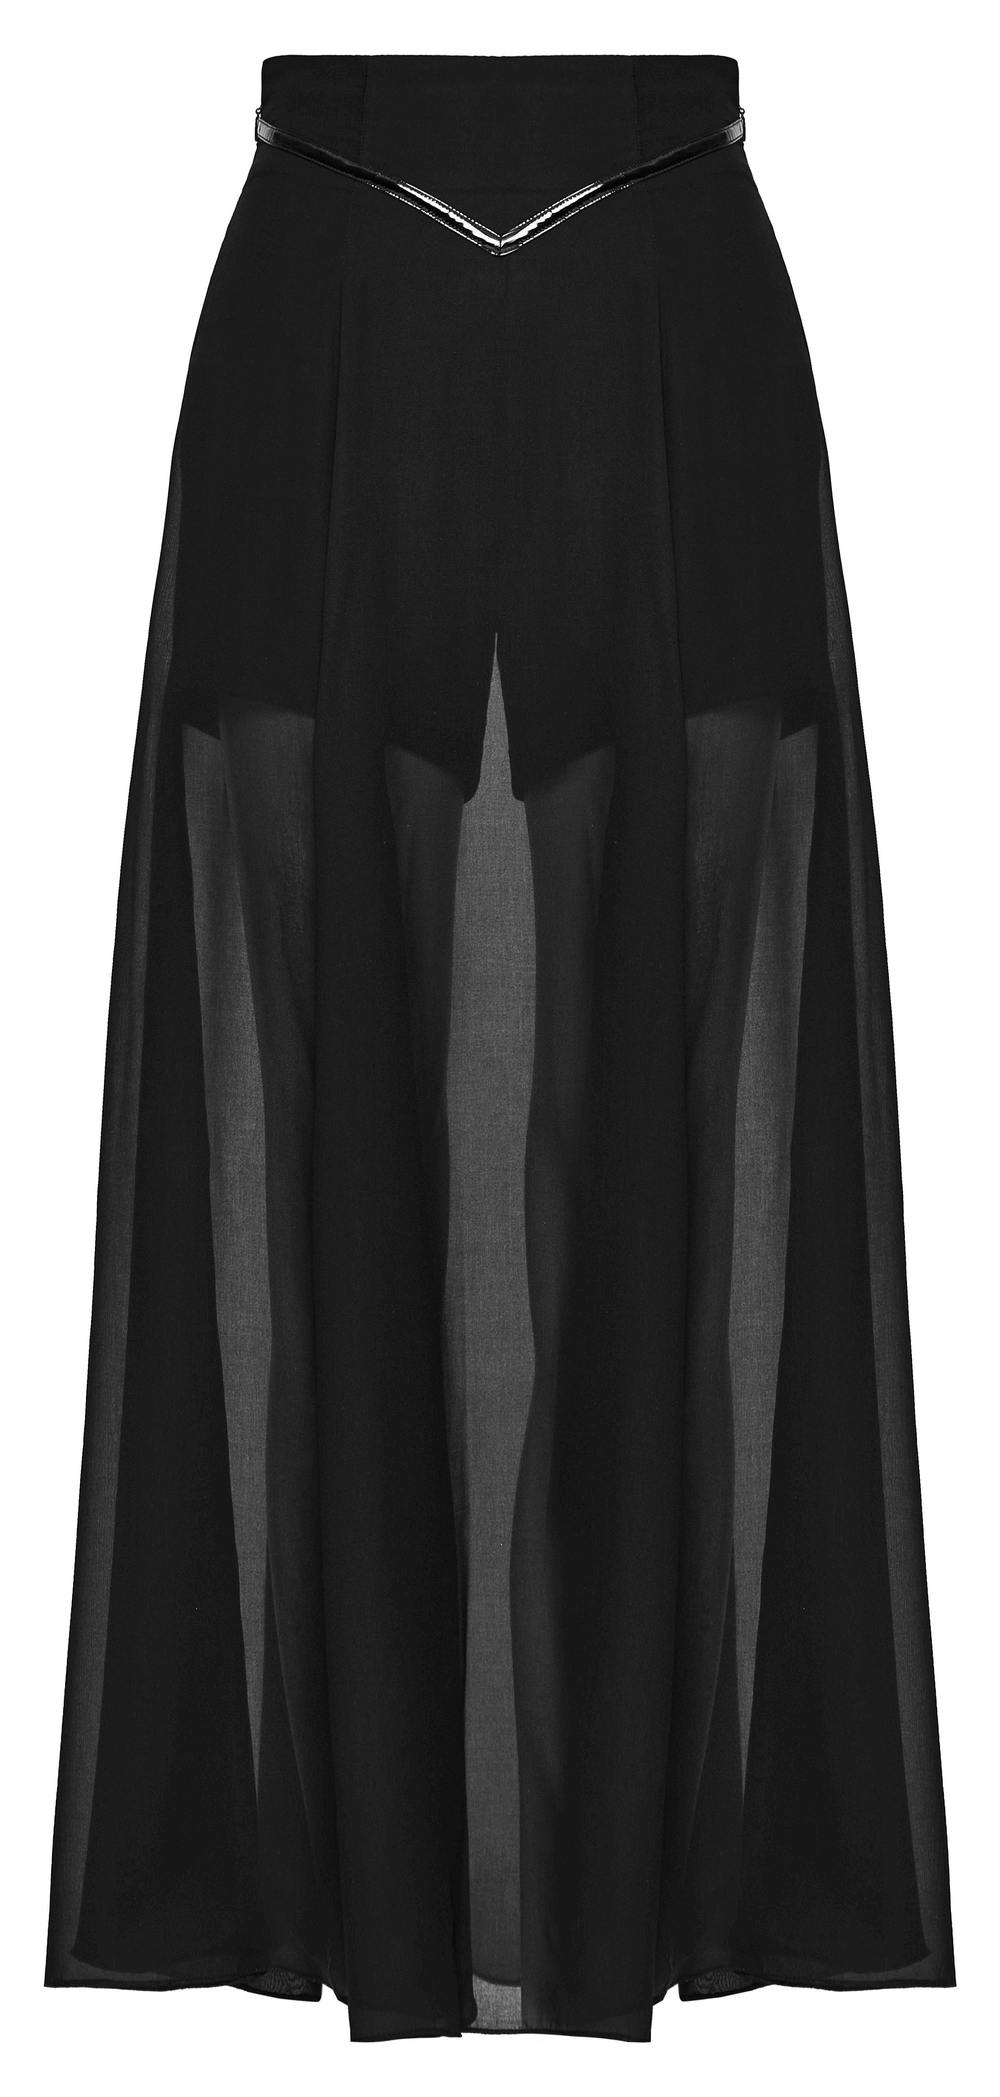 Black V-Cut Chiffon Pant-Skirt Patent Leather Accents